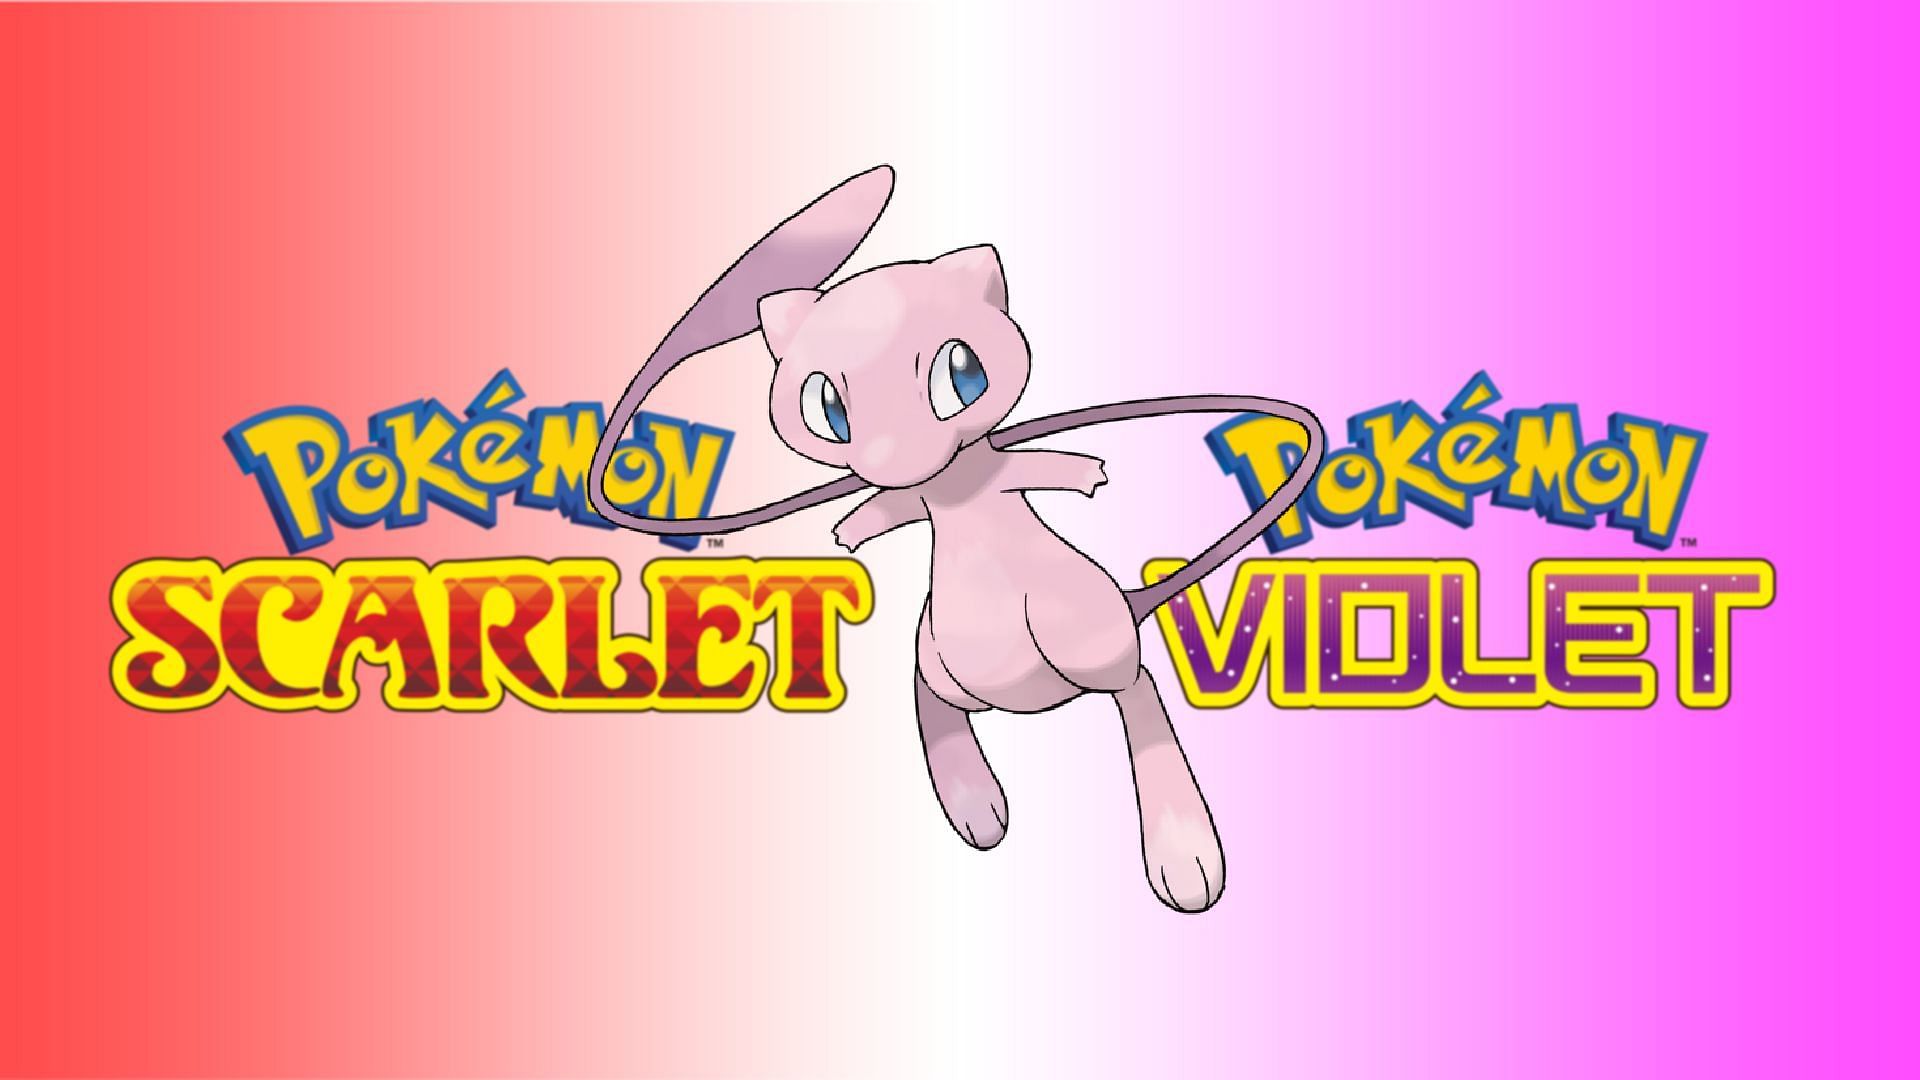 Pokémon Scarlet/Violet free download available now